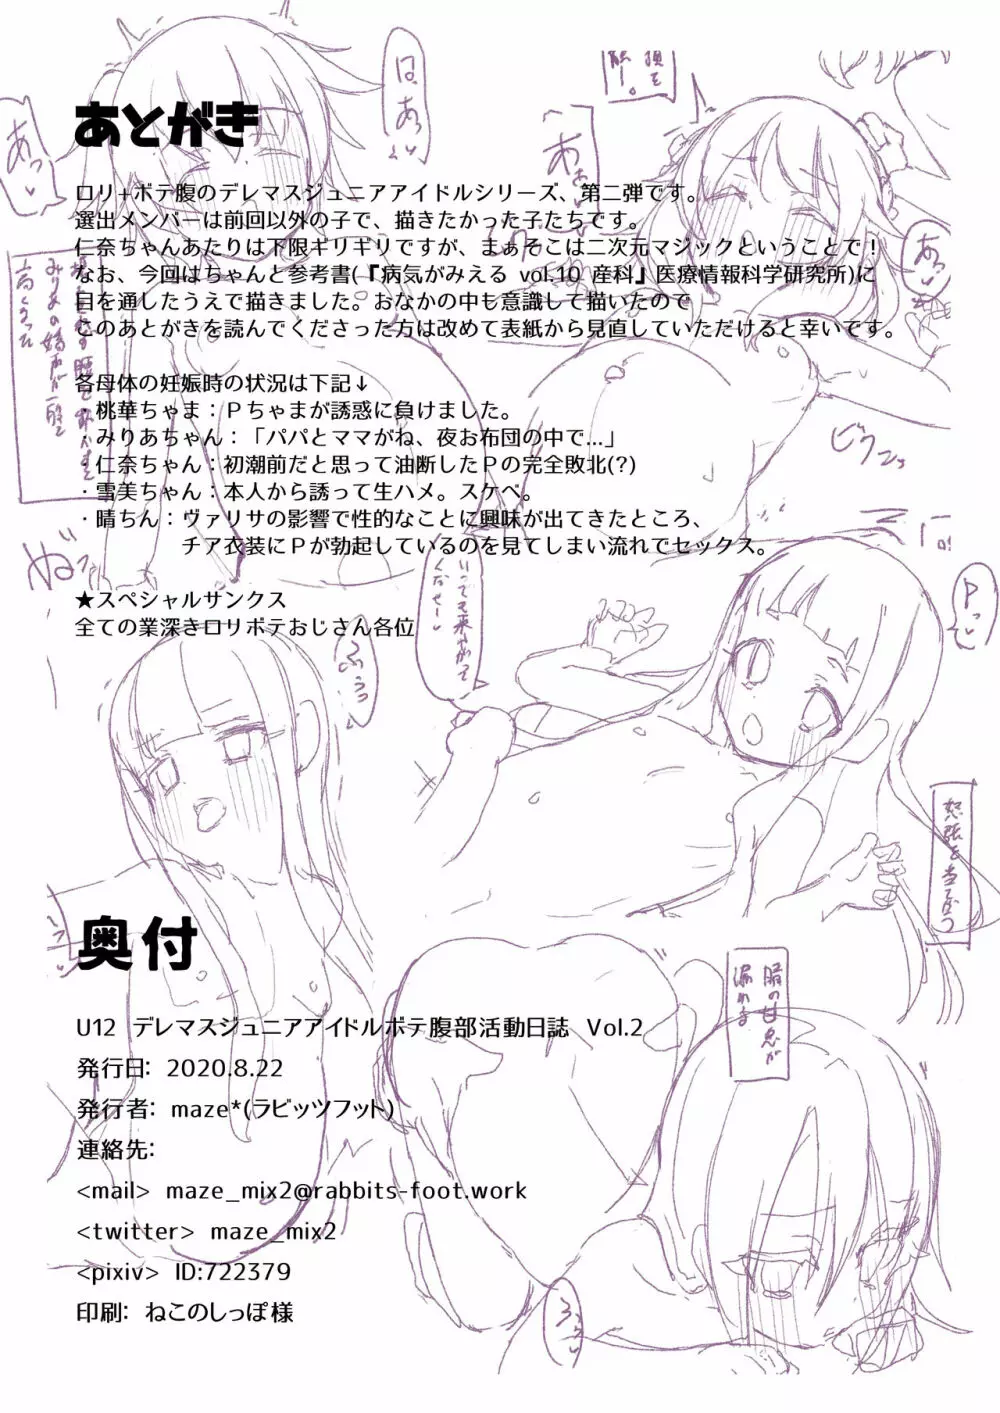 U12デレマスジュニアアイドルボテ腹部活動日誌 Vol.2 25ページ